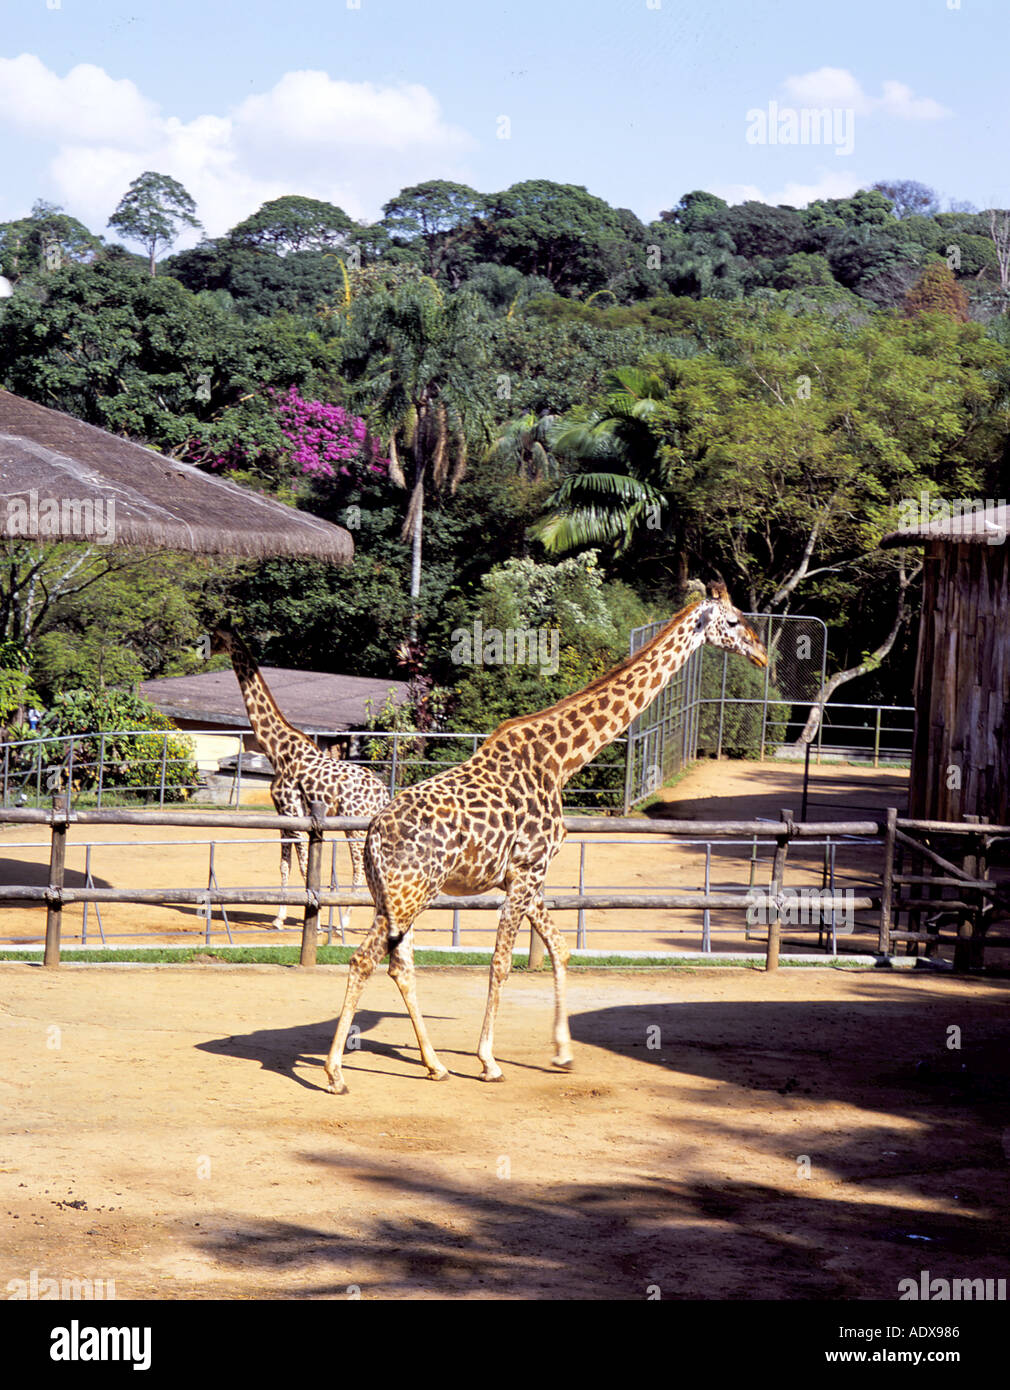 Travel São Paulo zoo garden giraffe giraffes area long neck long necked spotted two couple animal mammal leisure concept Stock Photo